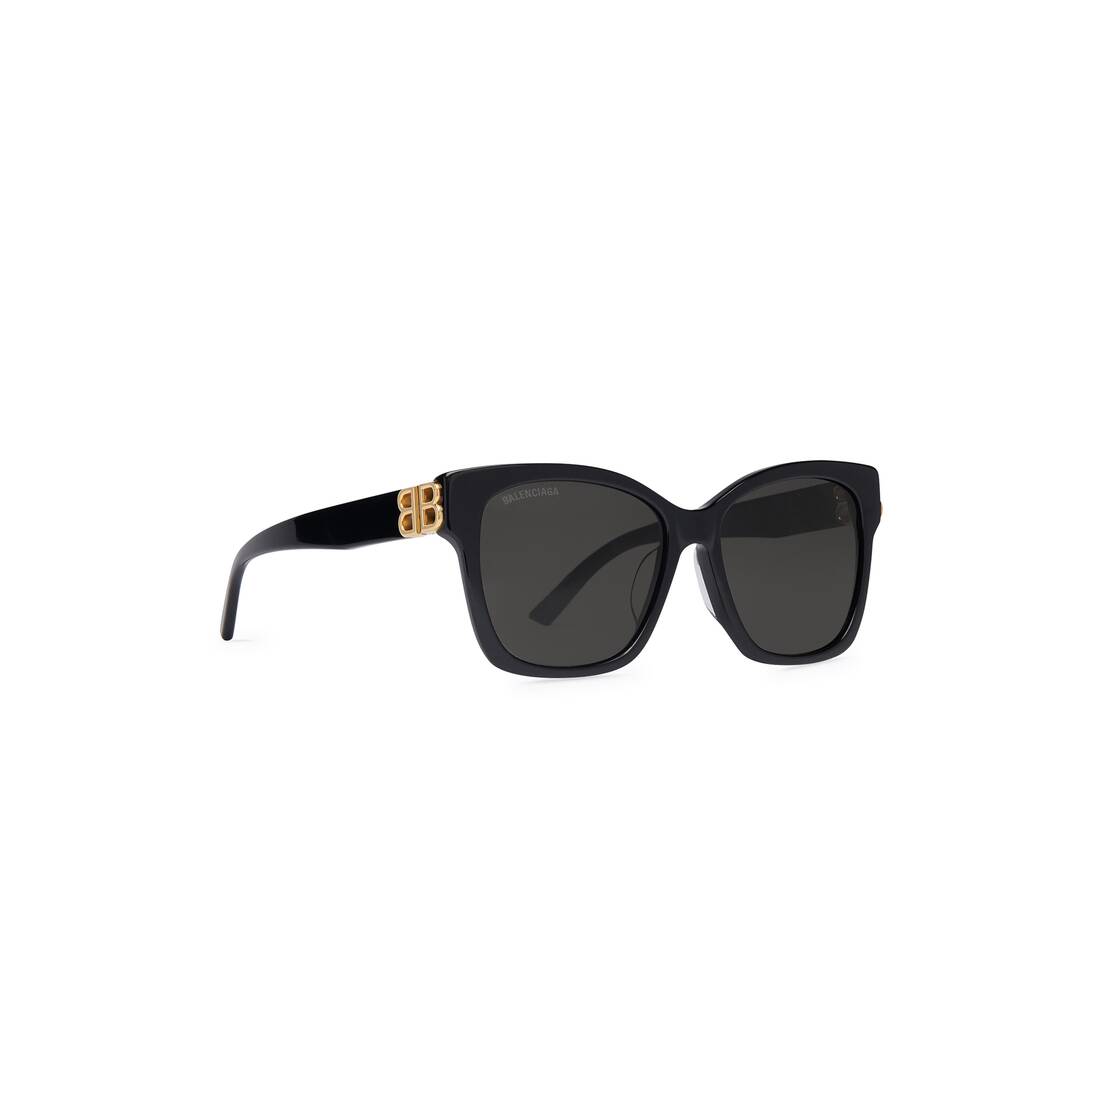 Women's Dynasty Square Sunglasses in Black